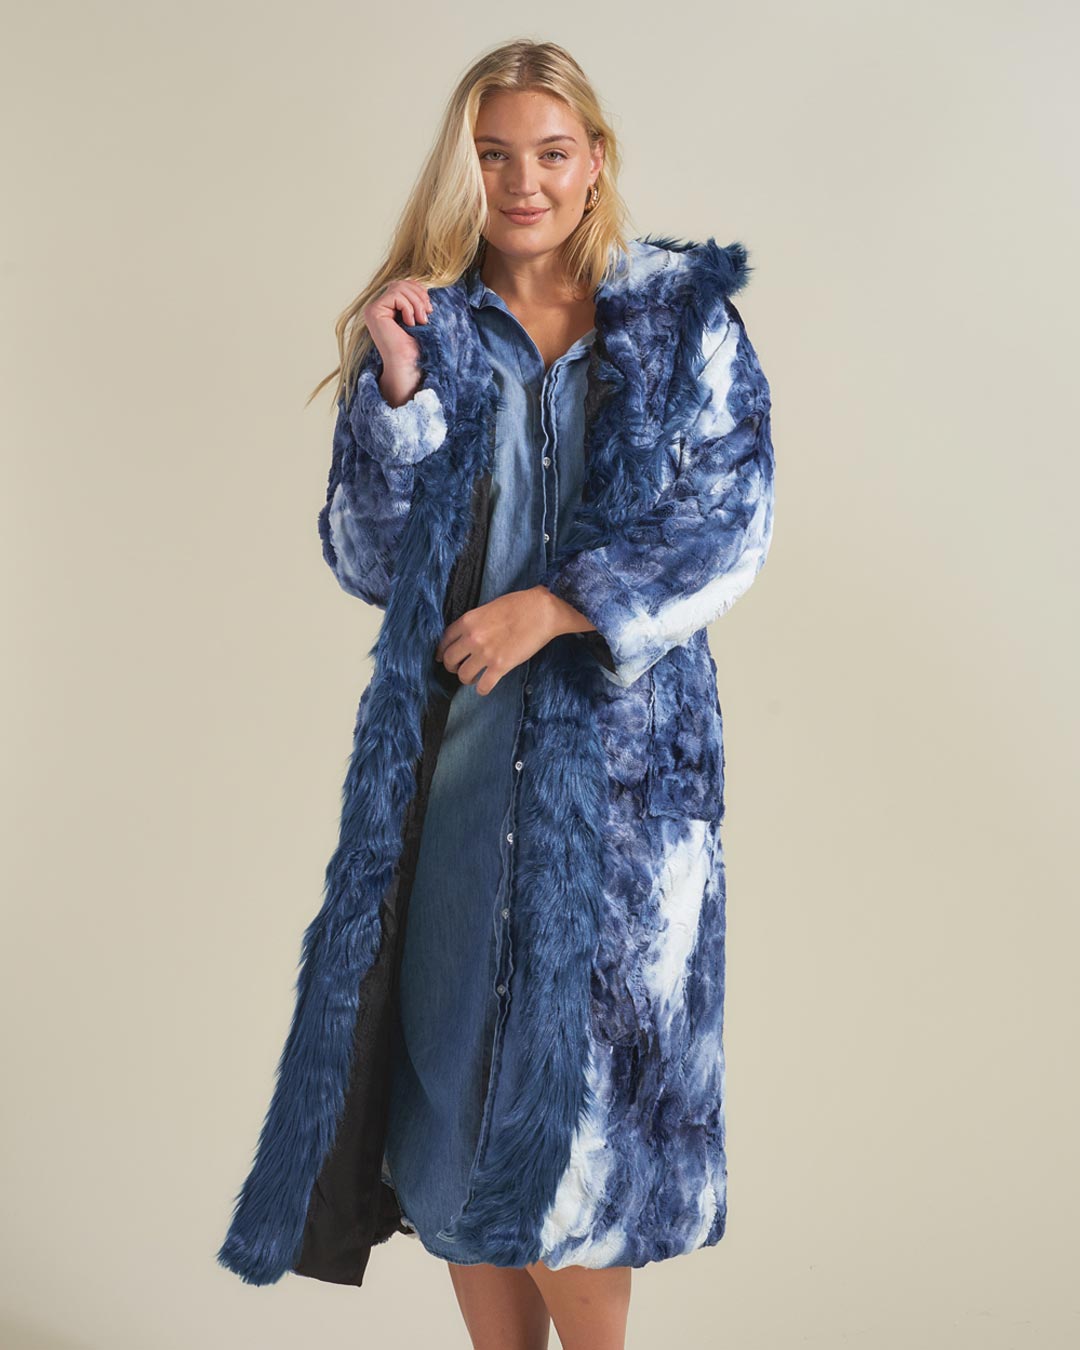 Faux Fur Robe in Classic Water Wolf Design Worn Over Denim Dress by Blonde Female Model